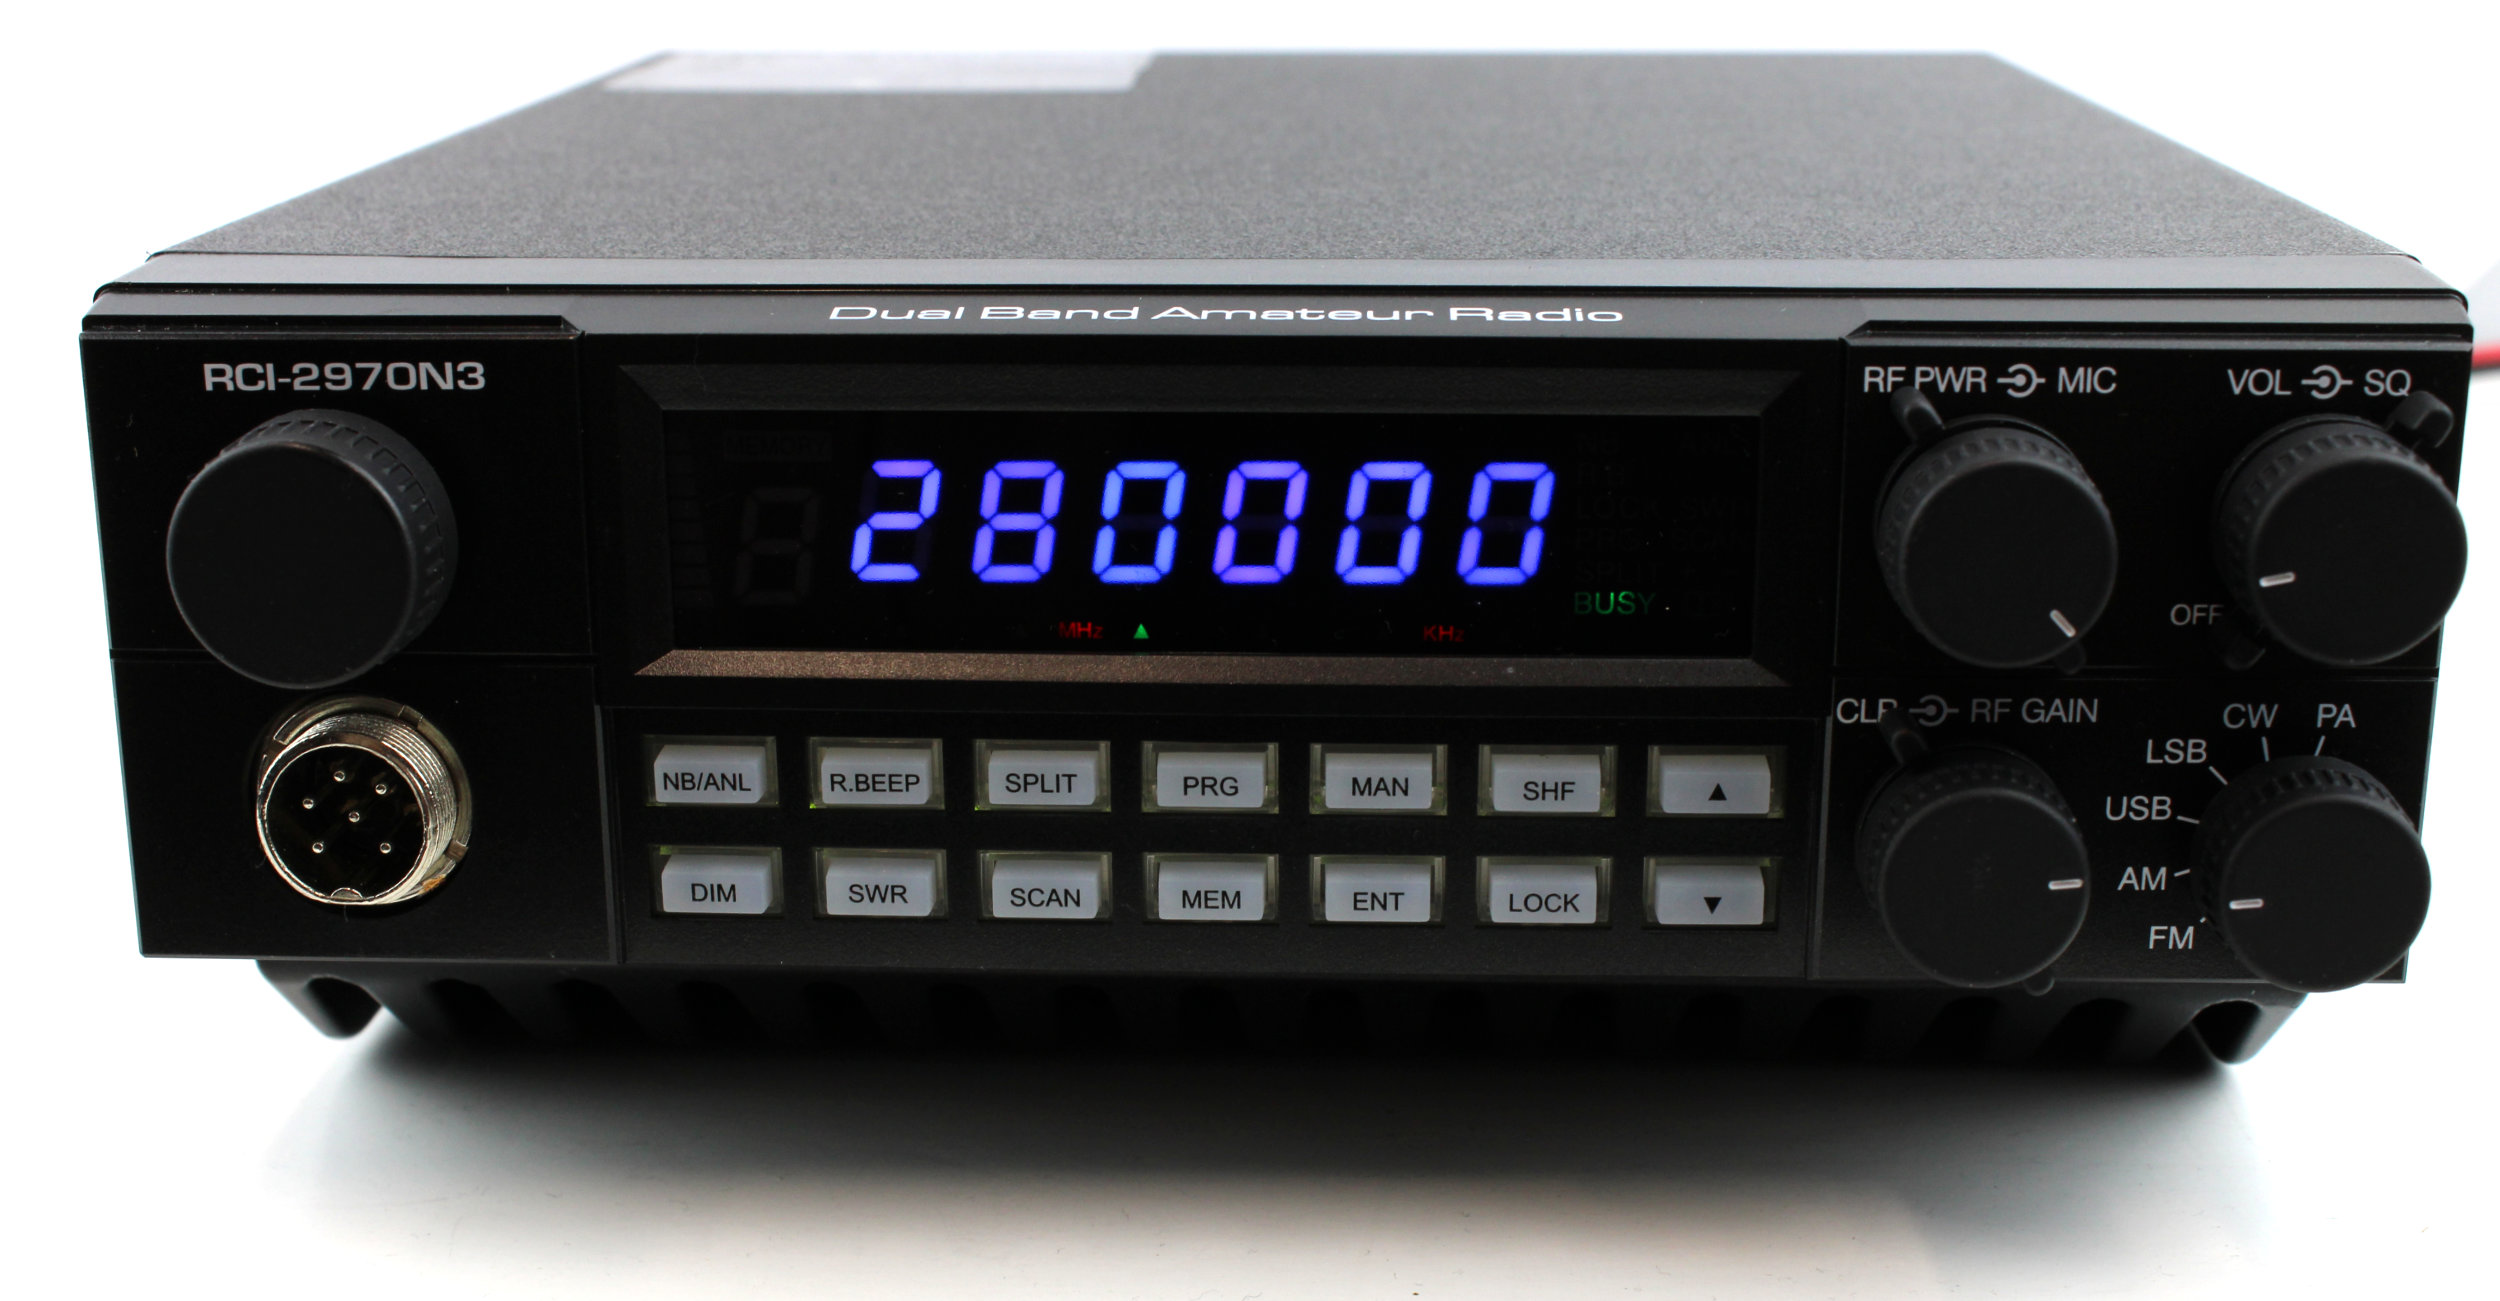 Ranger RCI 2970N3 | 10 Meter Radio for Sale | 300-Watt Radio